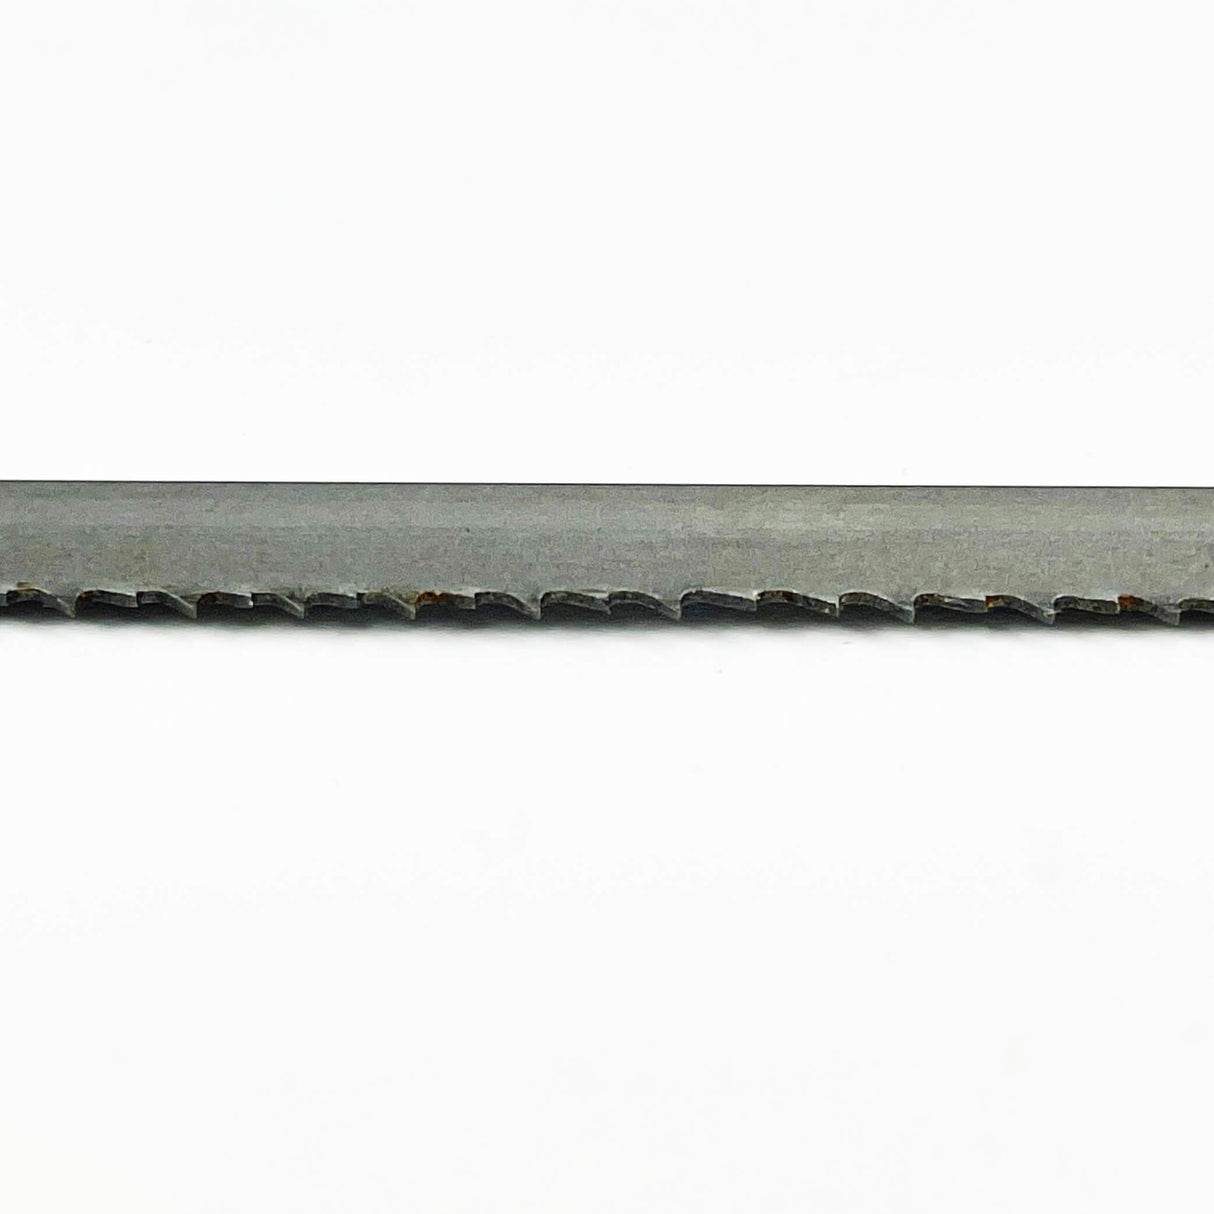 3860mm Long x 13mm Wide COBALT M42 Bi-Metal Band Saw - Pack of 2 Blades